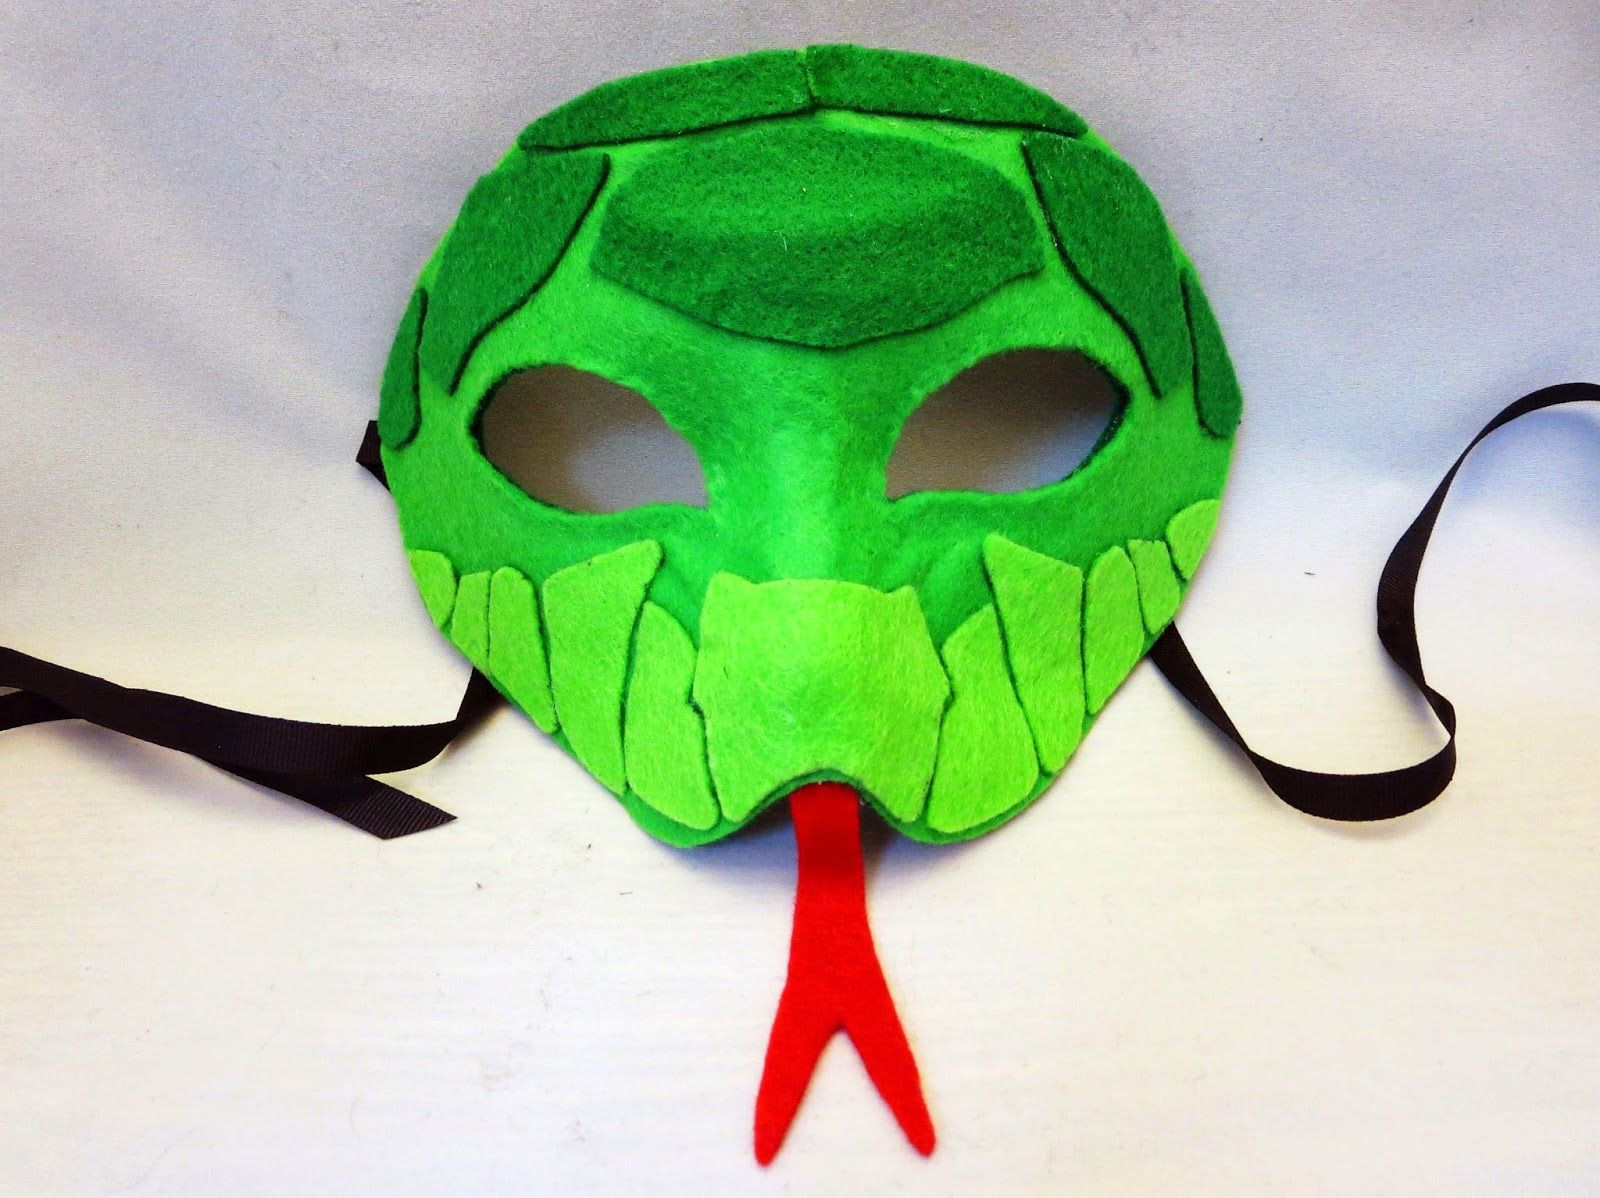 Best ideas about DIY Costume Masks
. Save or Pin DIY Felt Snake Mask DIY Now.